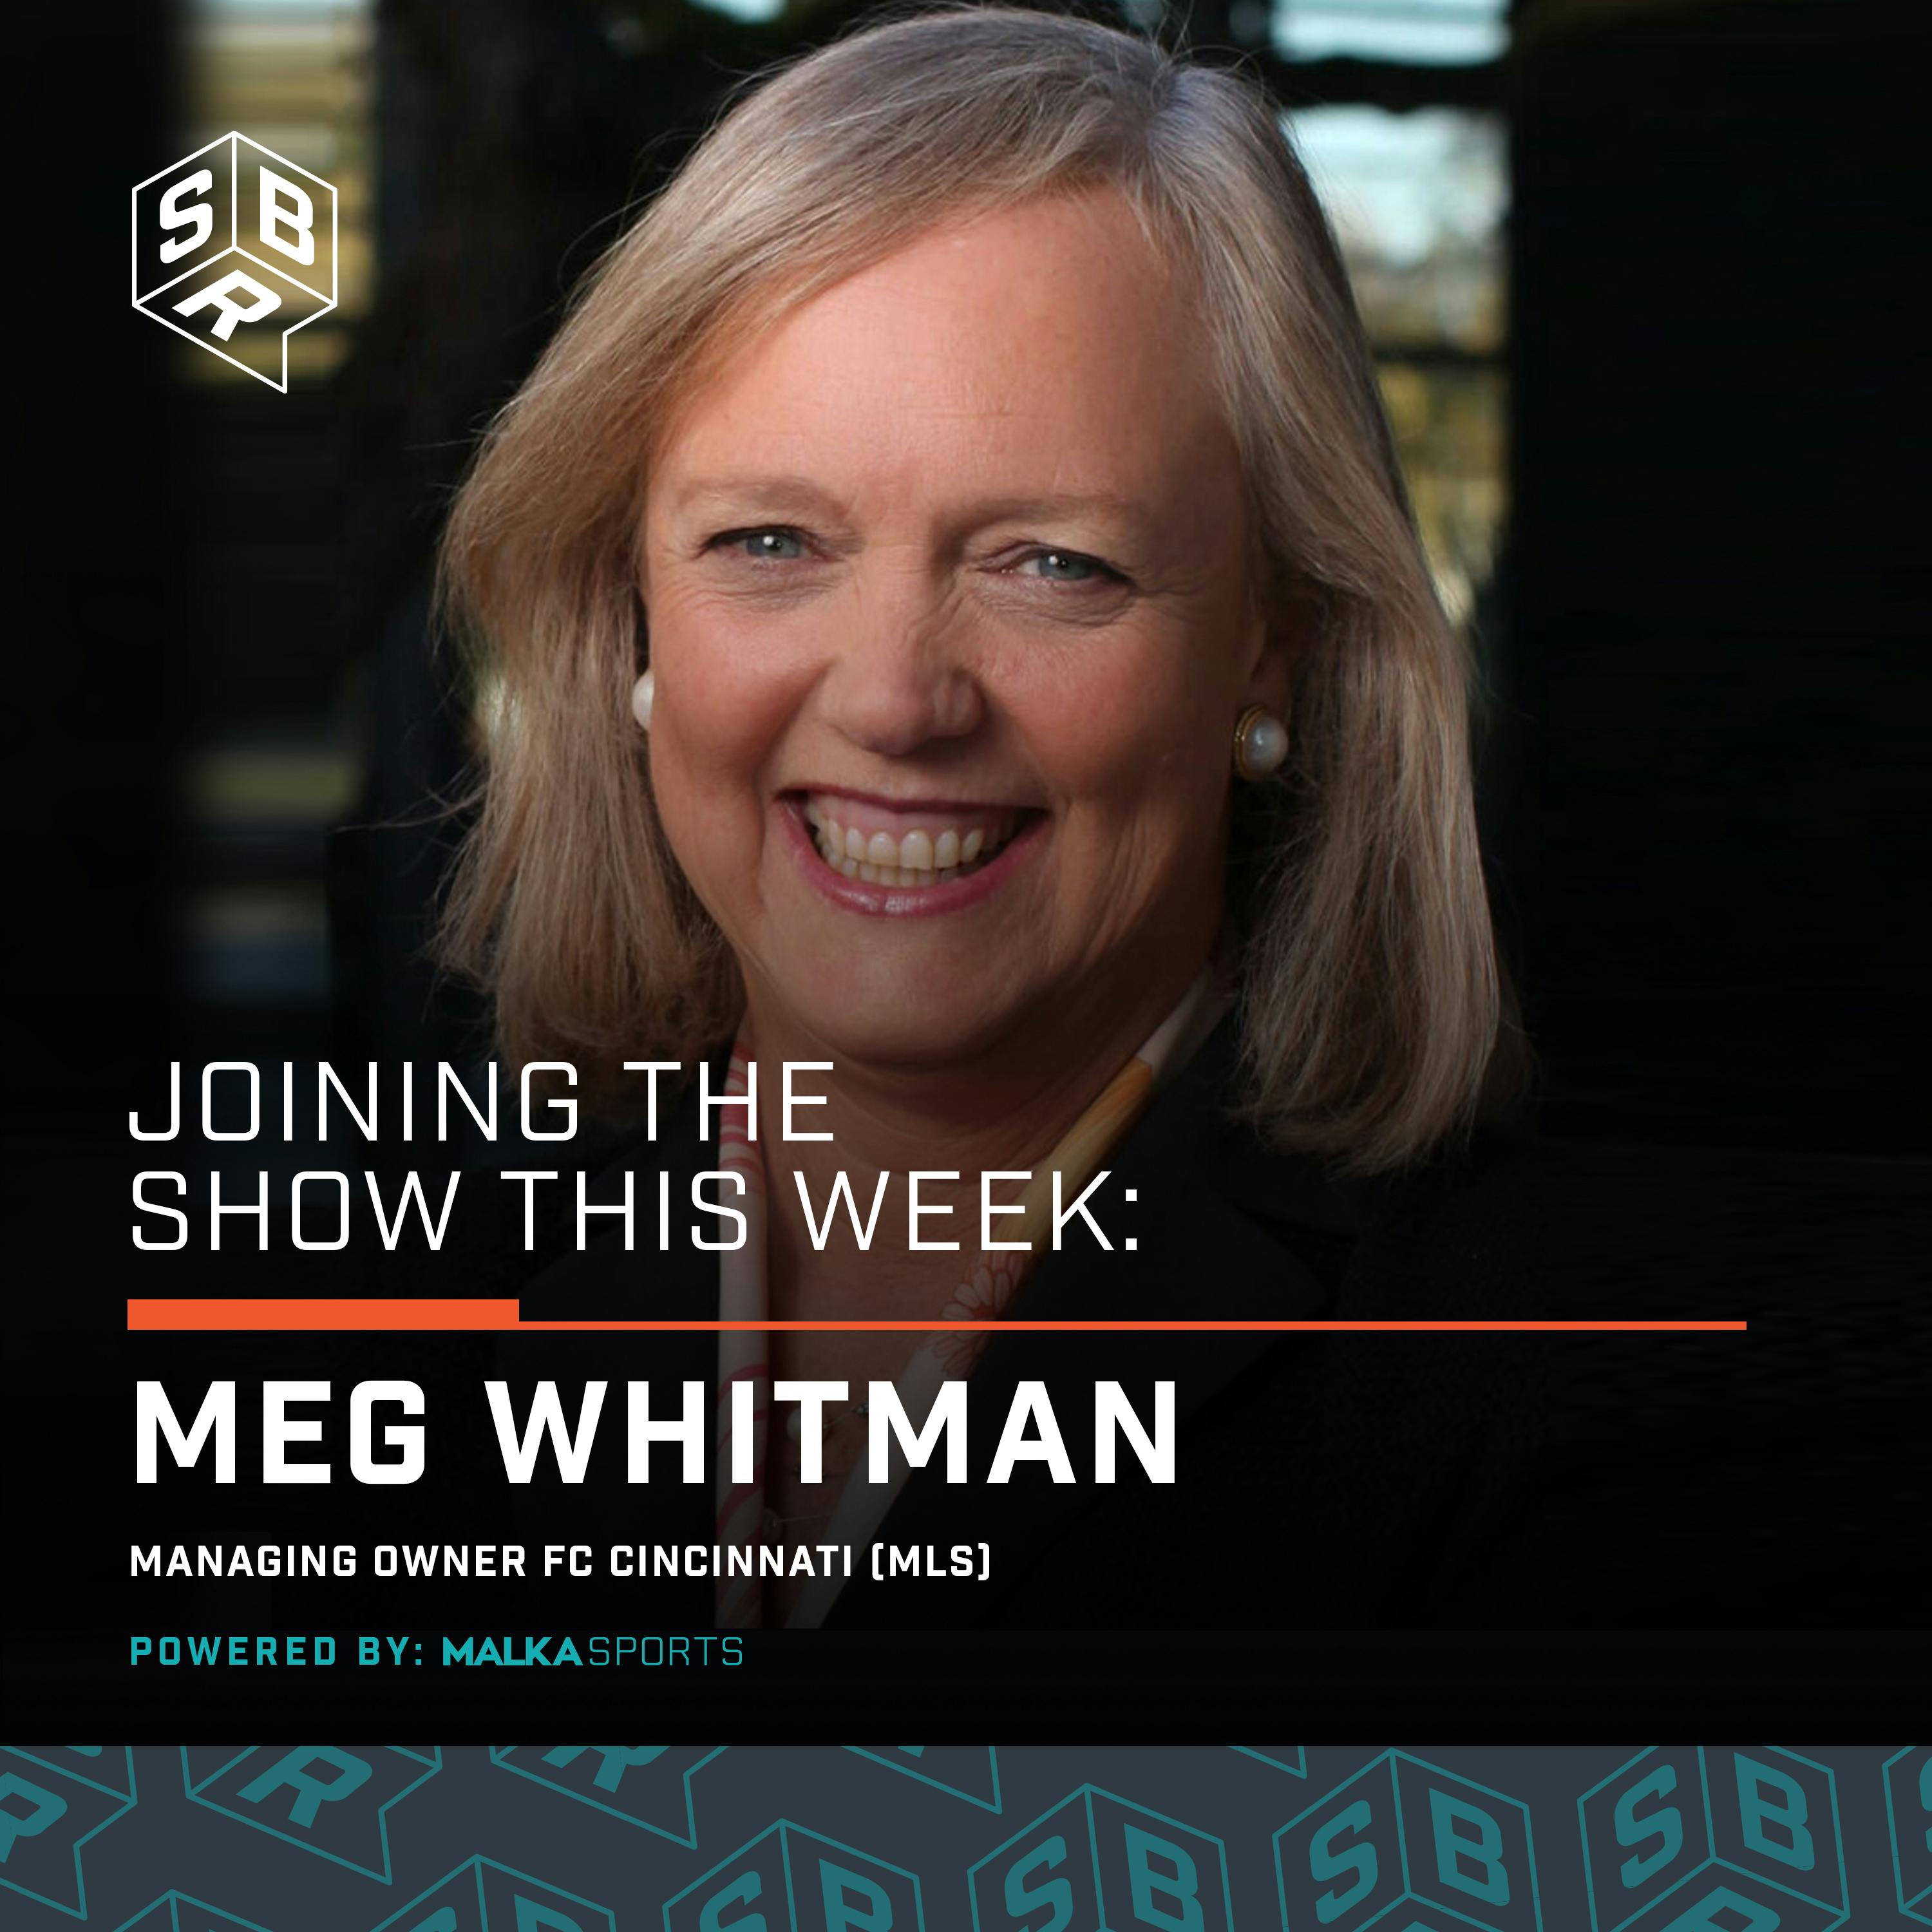 Meg Whitman (@MegWhitman), Managing Owner of FC Cincinnati of MLS